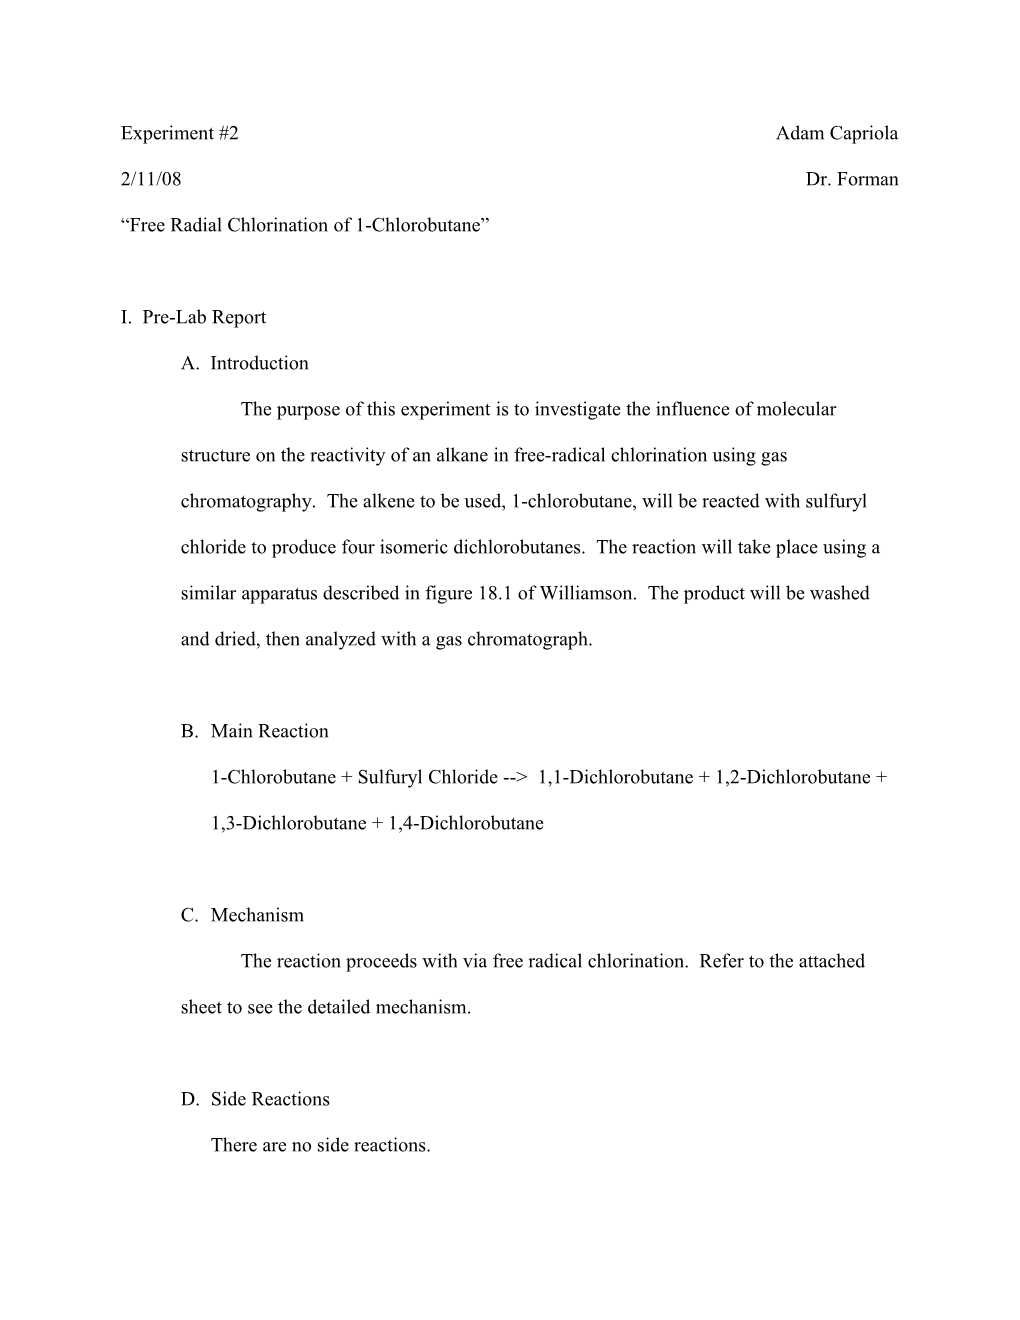 Free Radial Chlorination of 1-Chlorobutane